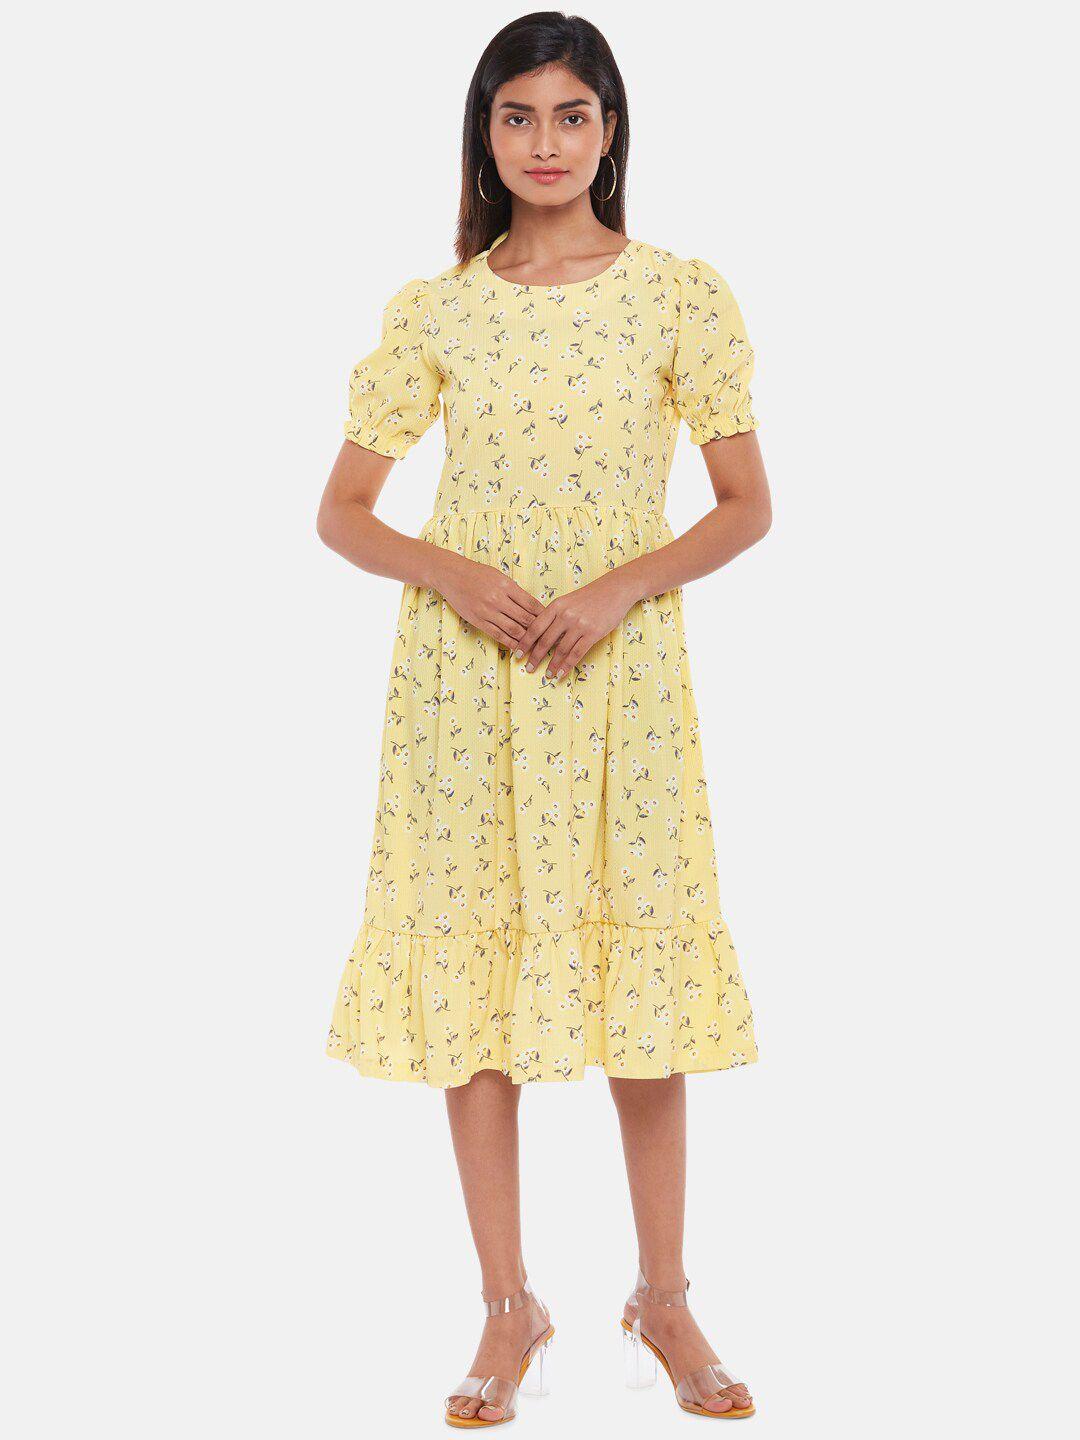 honey by pantaloons yellow floral dress